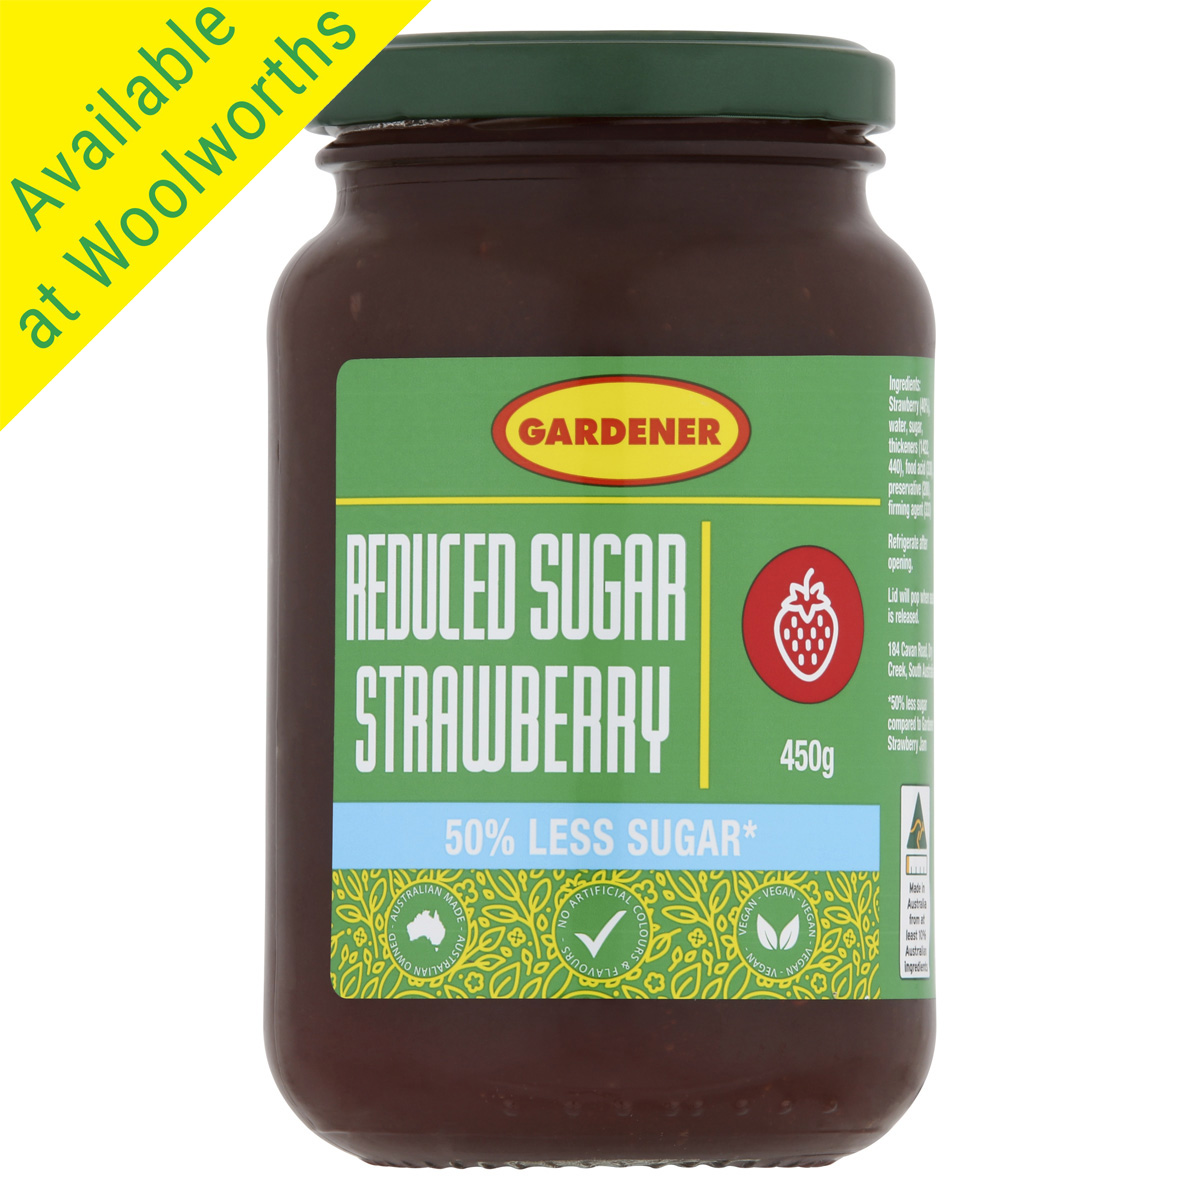 Gardener Reduced Sugar Strawberry Jam